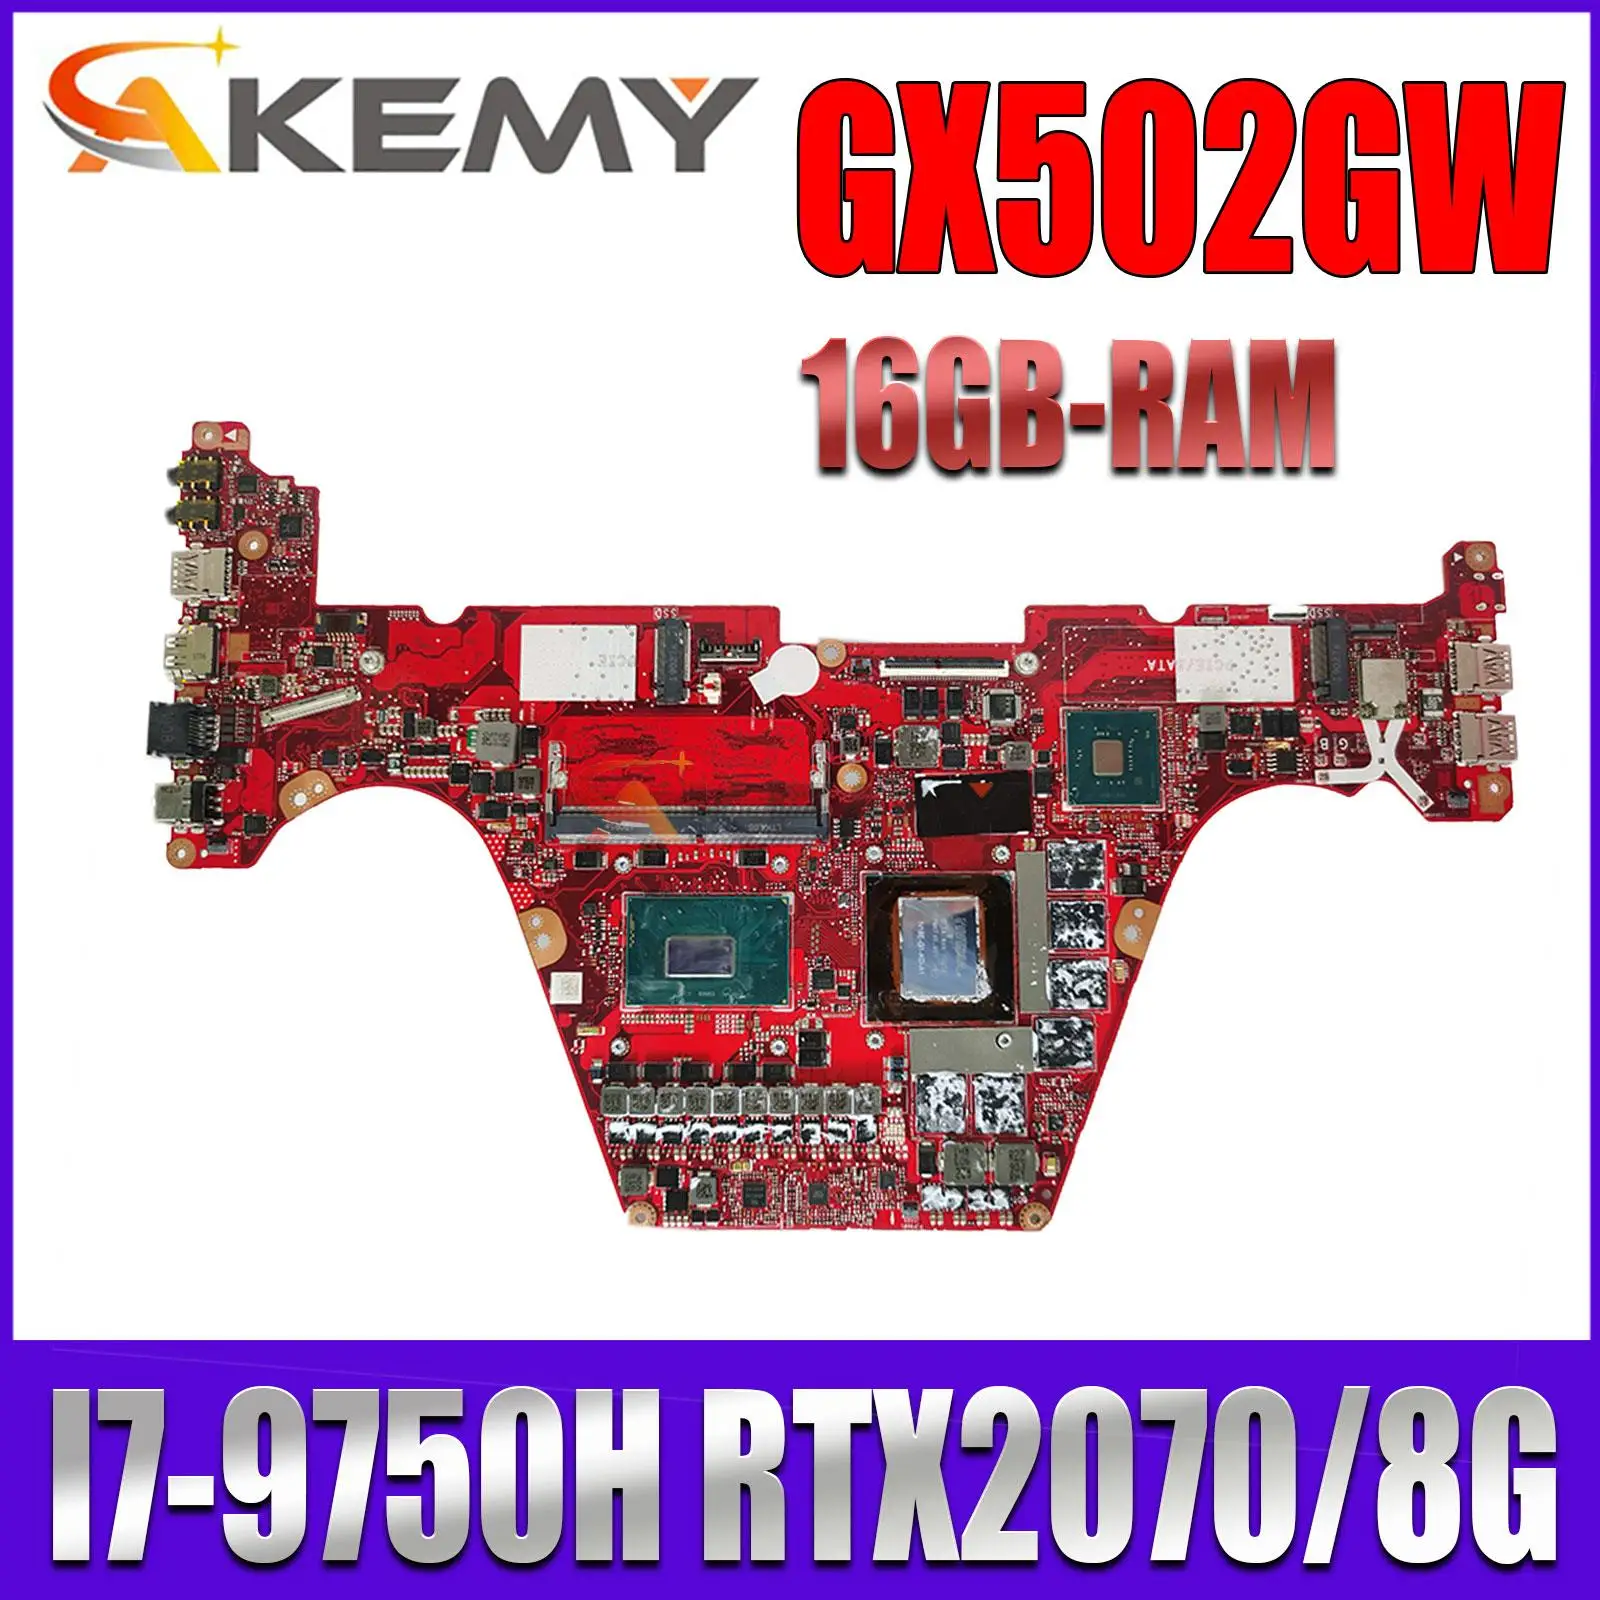 

GX502GW Laptop Motherboard For Asus ROG Zephyrus S GX502GW GX502GV GX502G GU501LWS Mainboar 100% work w/I7-9750H RTX2070/8G-16GB